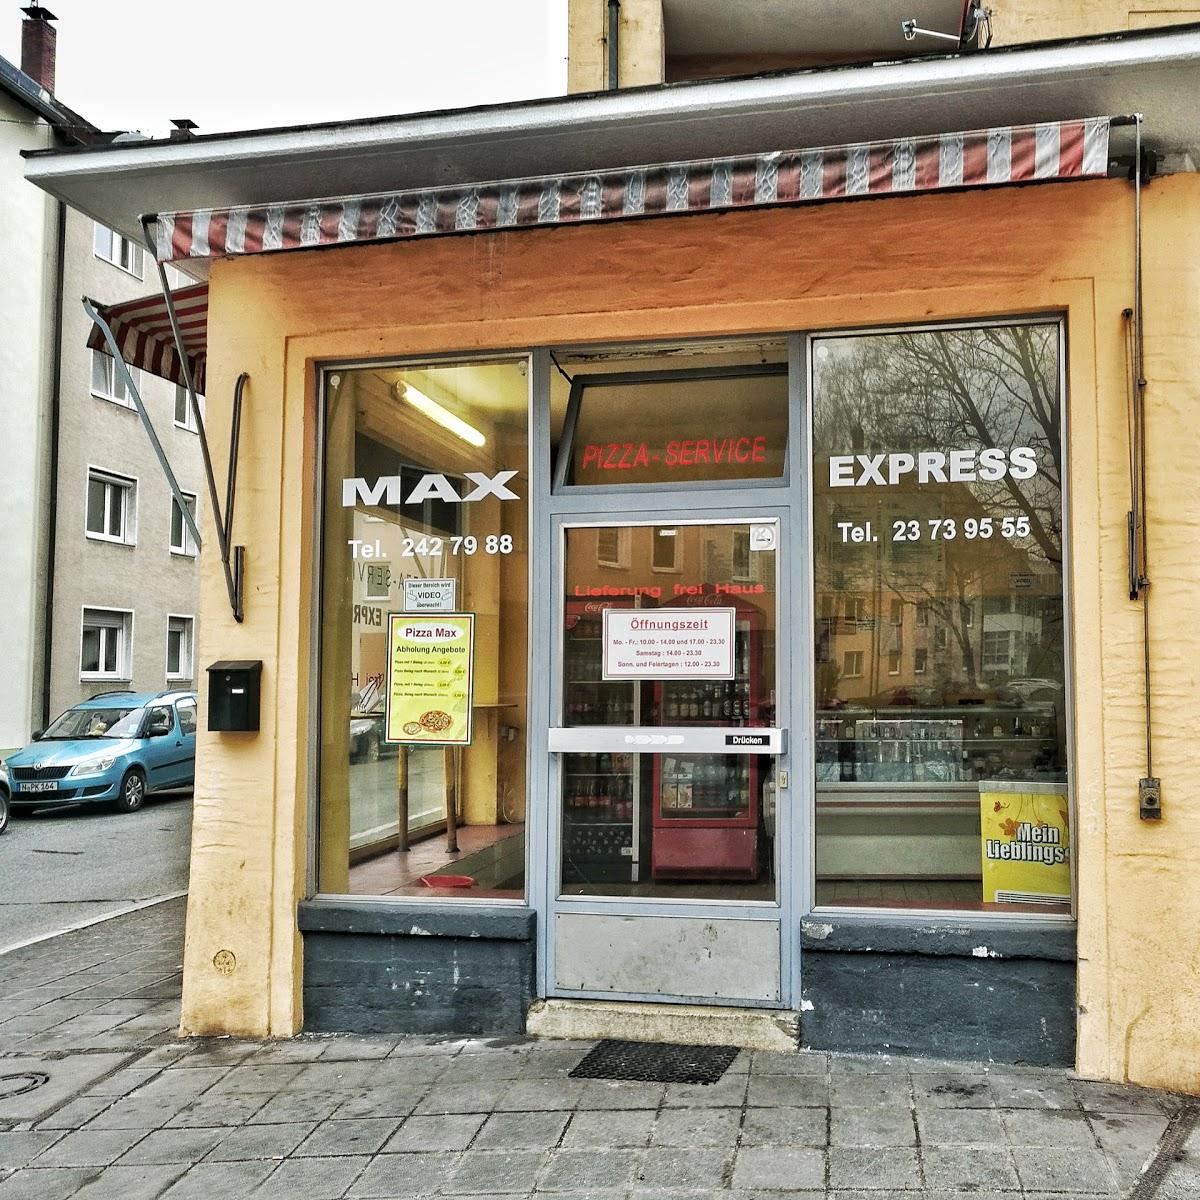 Restaurant "Pizza Service Max Express" in Nürnberg